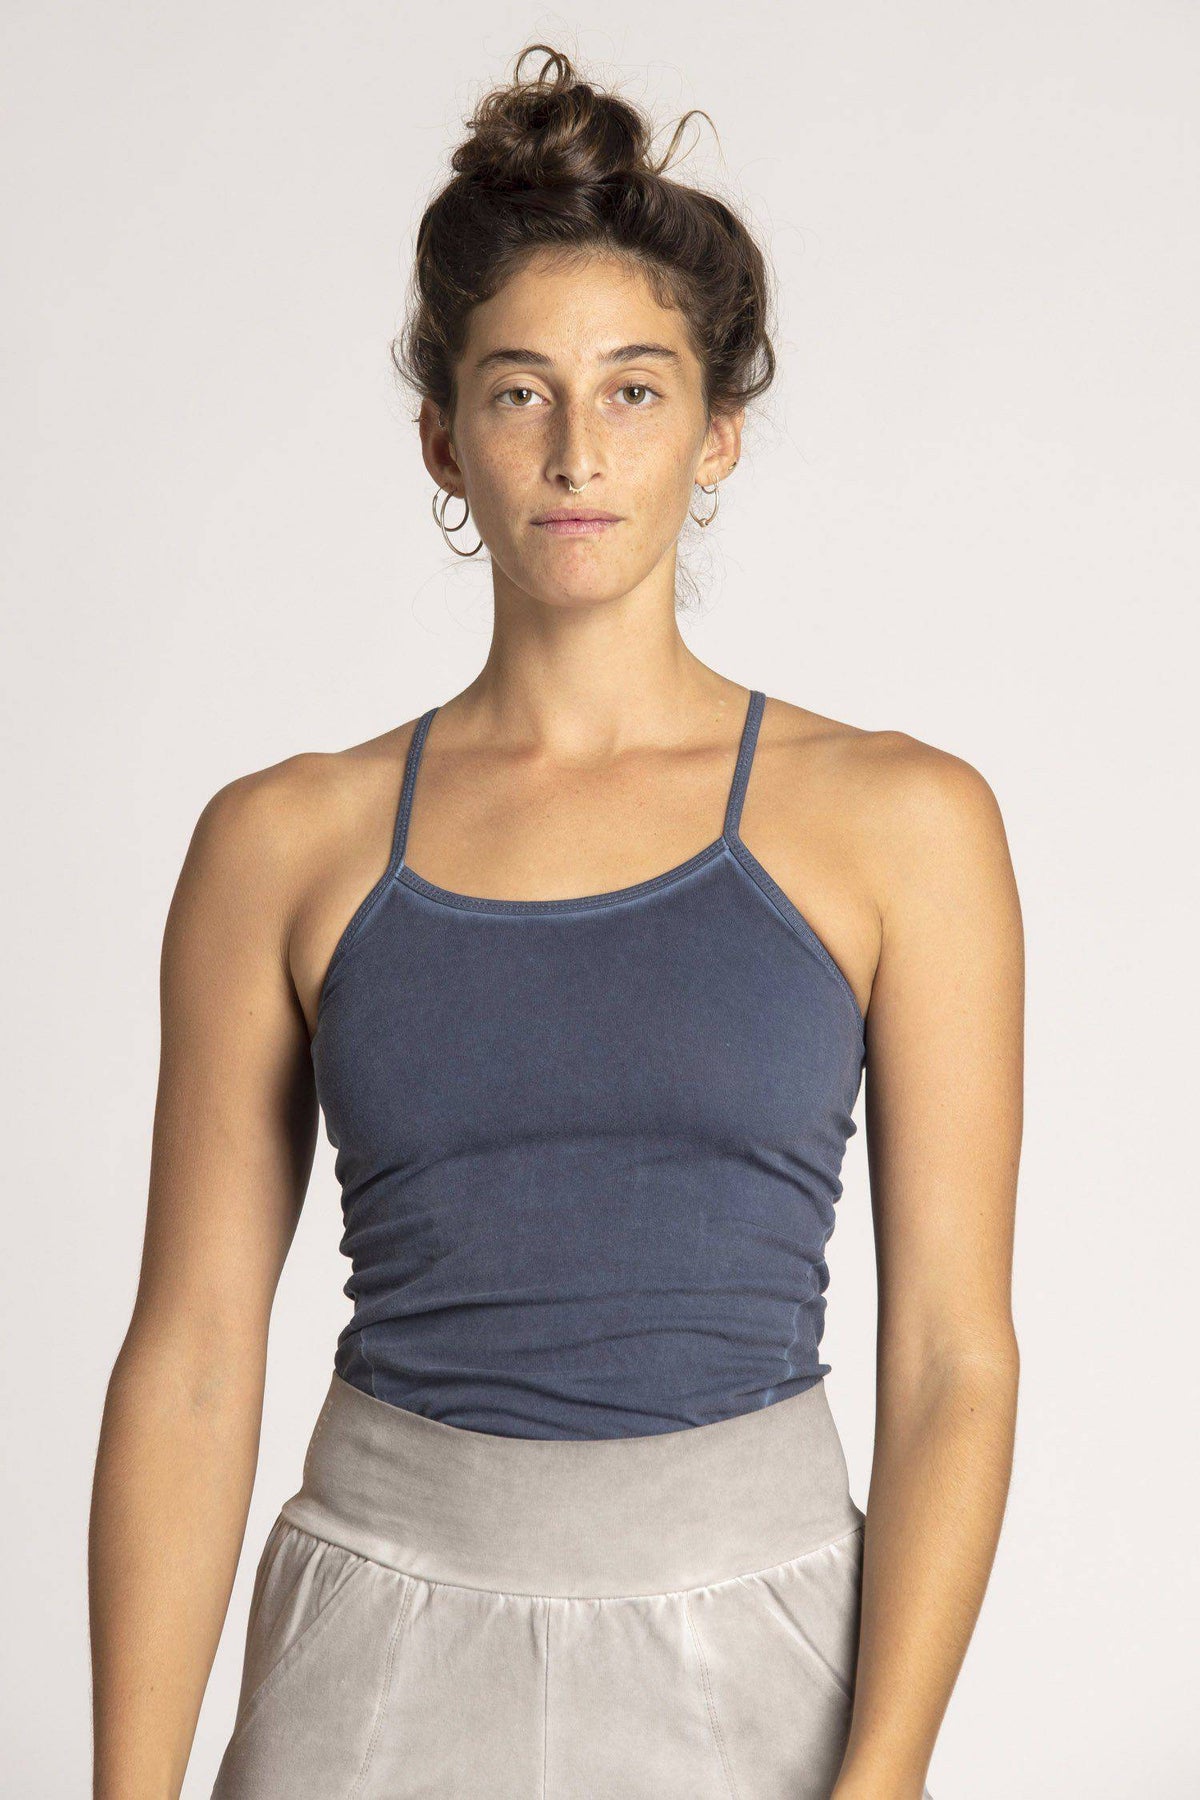 Stone Wash Criss Cross Tank Top - womens clothing - Ripple Yoga Wear